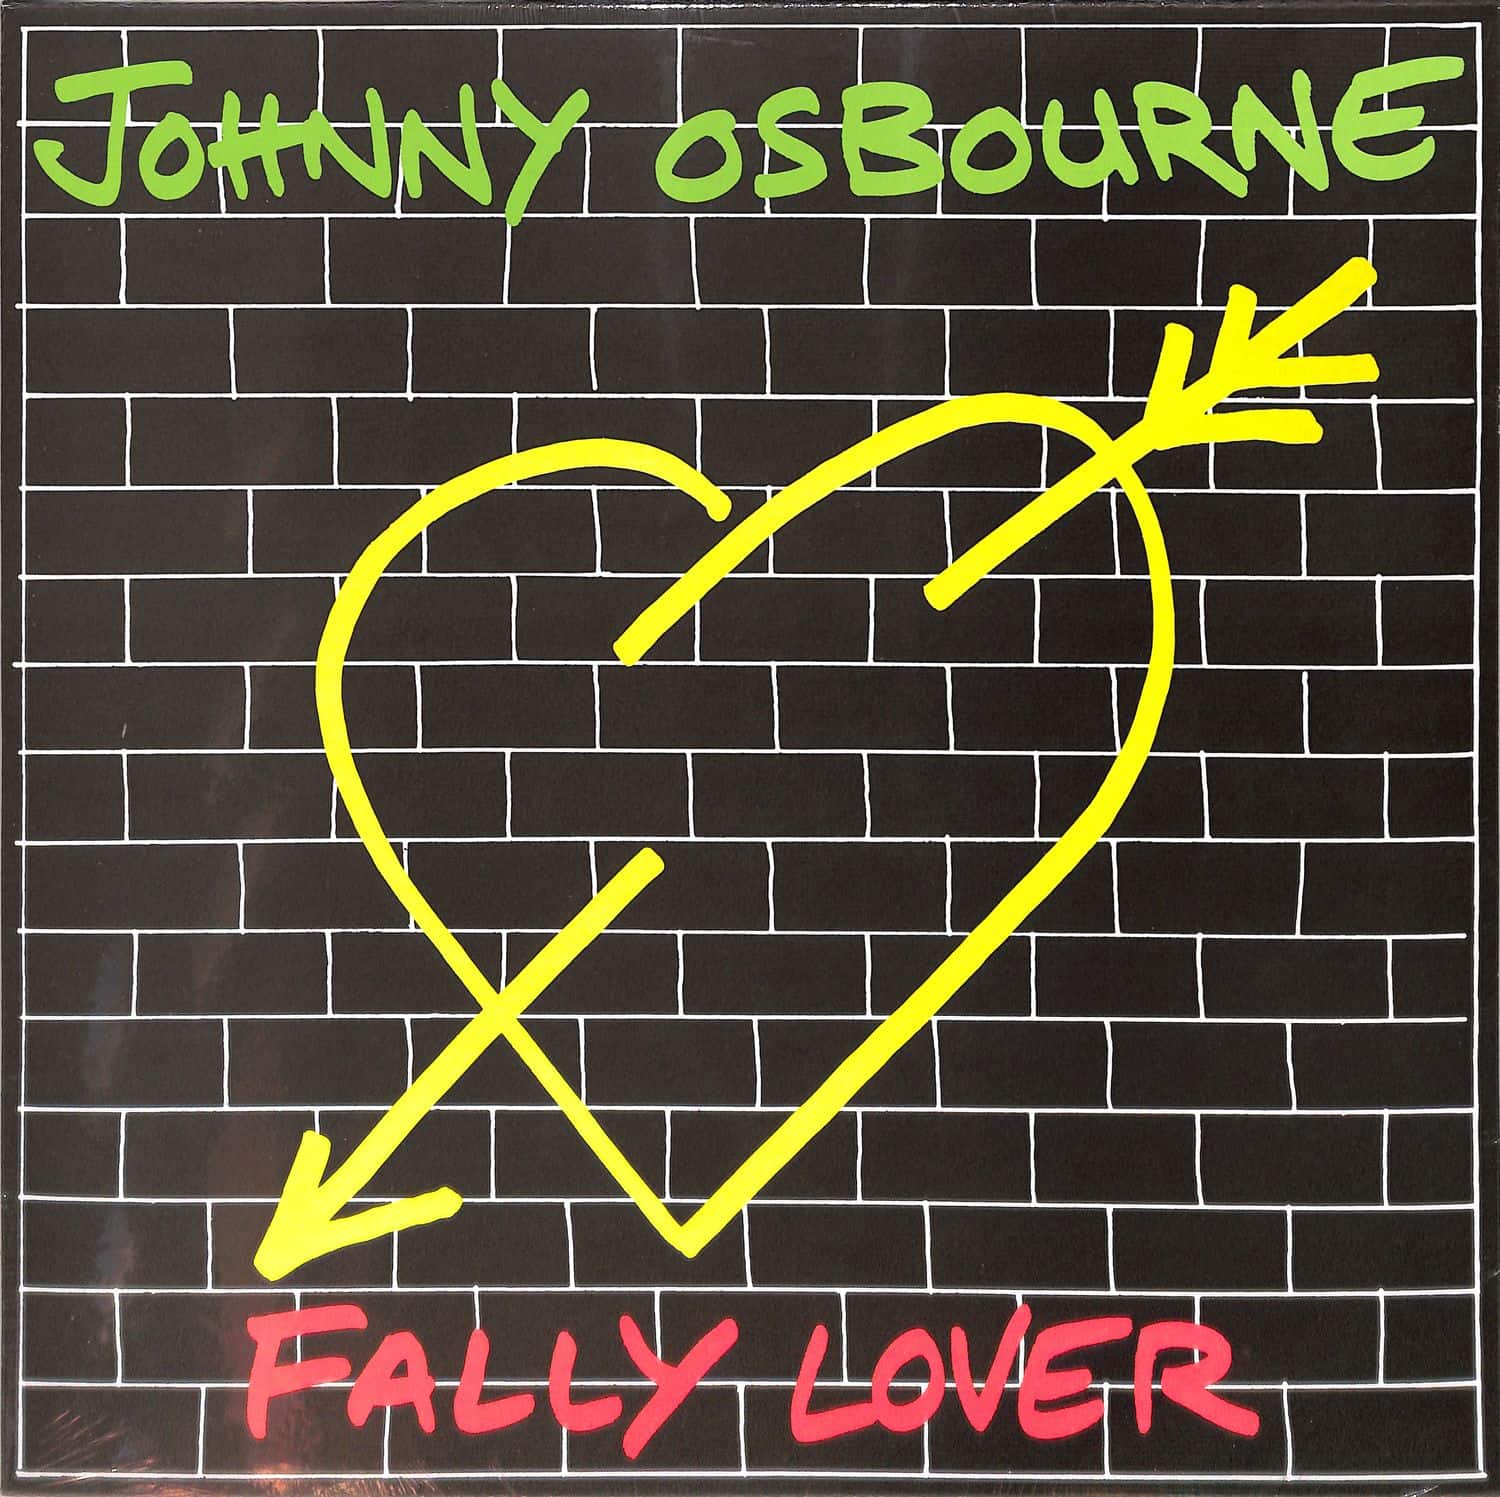 Johnny Osbourne - FALLY LOVER 